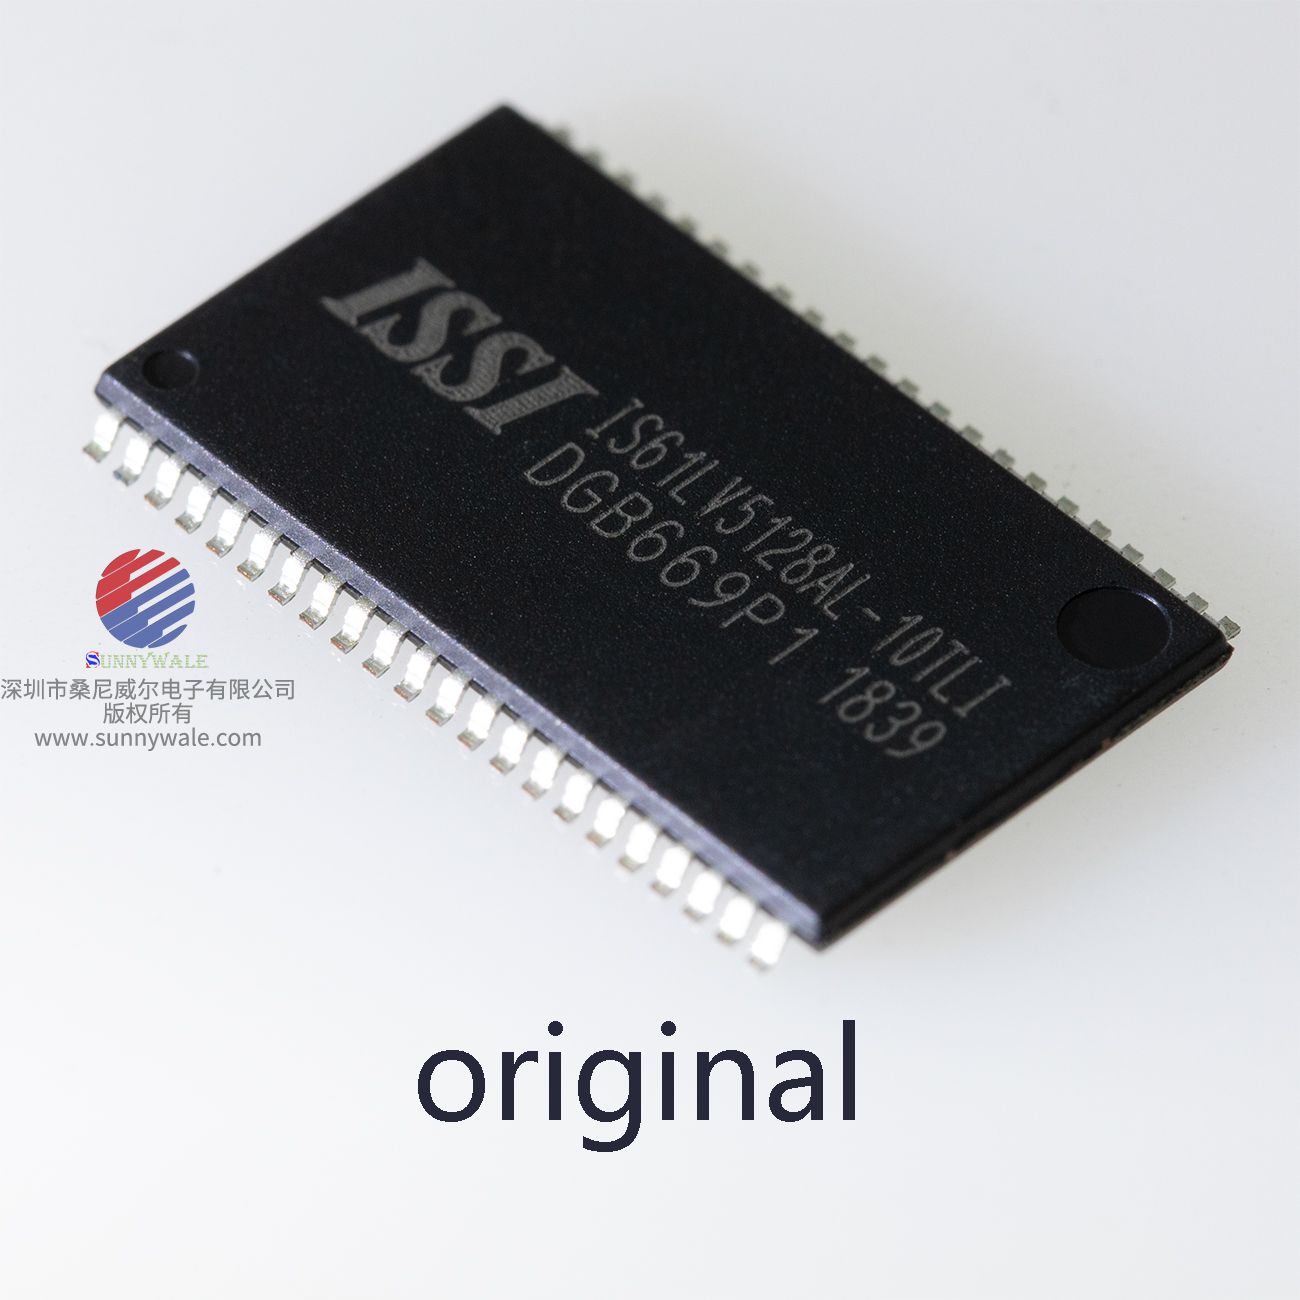 IS61LV5128AL-10TLI， ISSI RAM，512K×8高速静态RAM